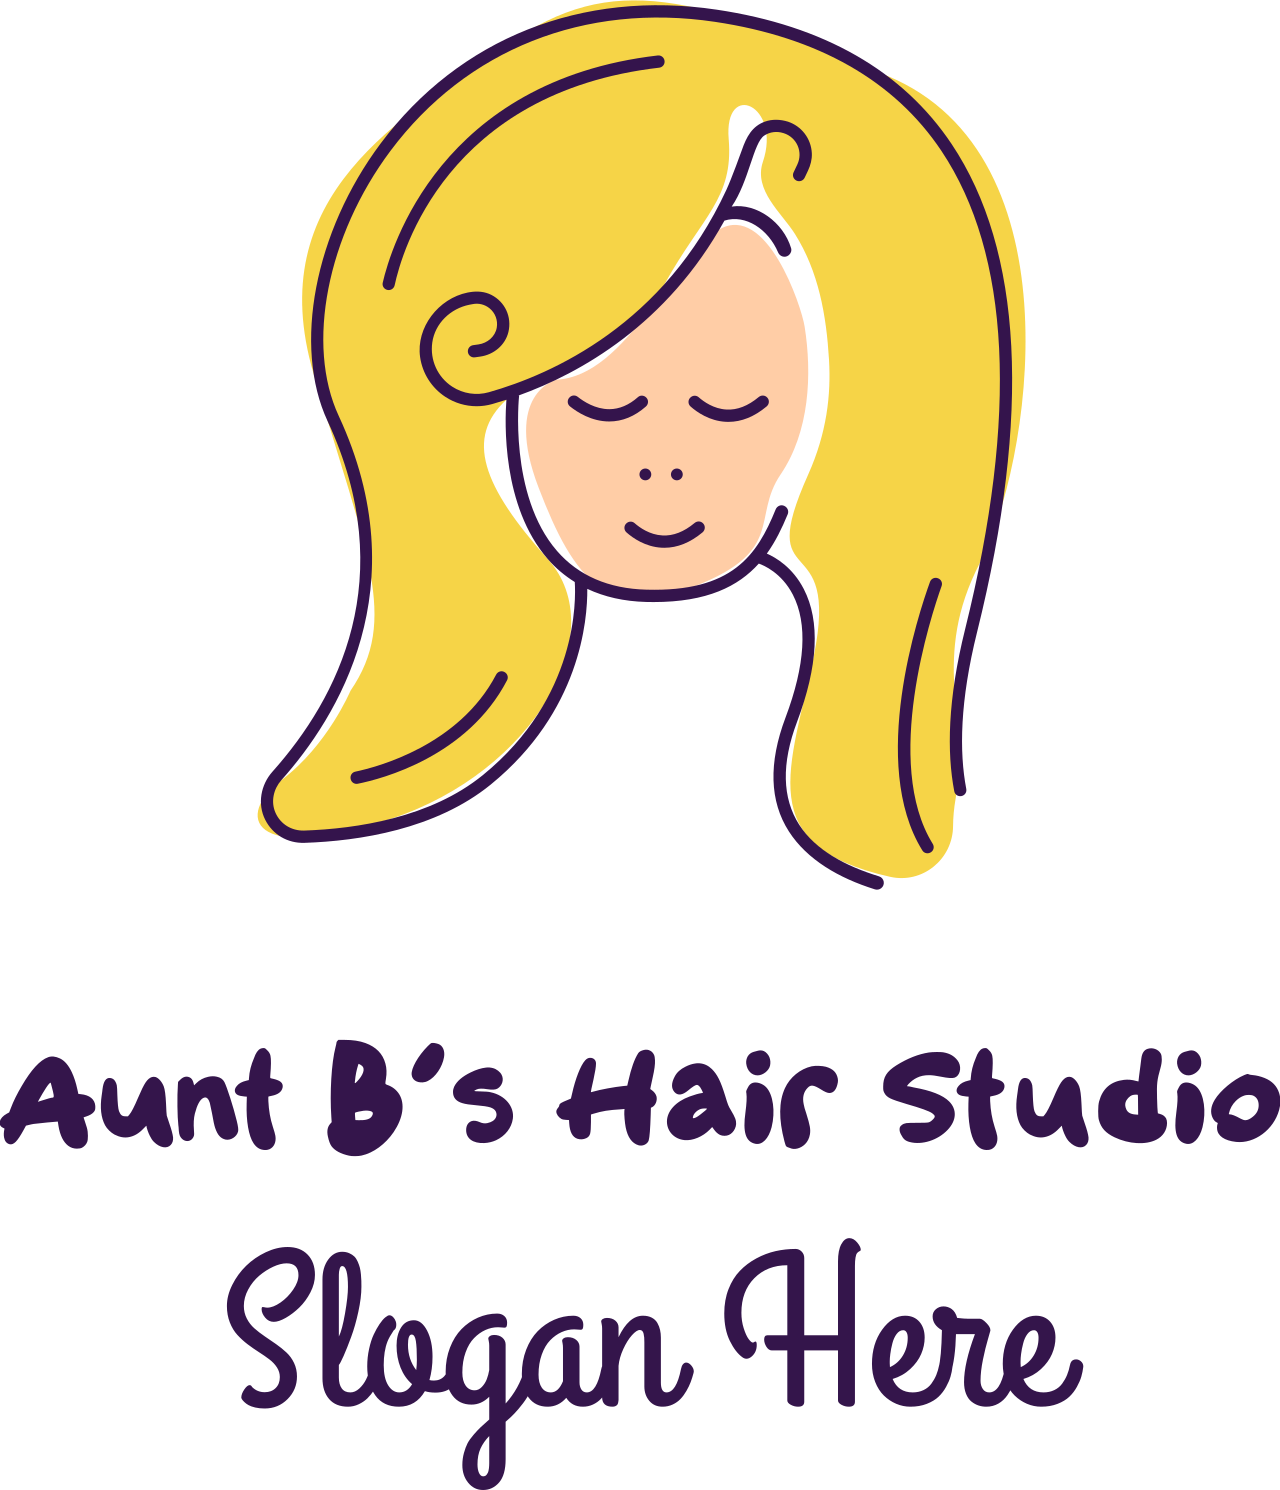 Aunt B’s Hair Studio's logo